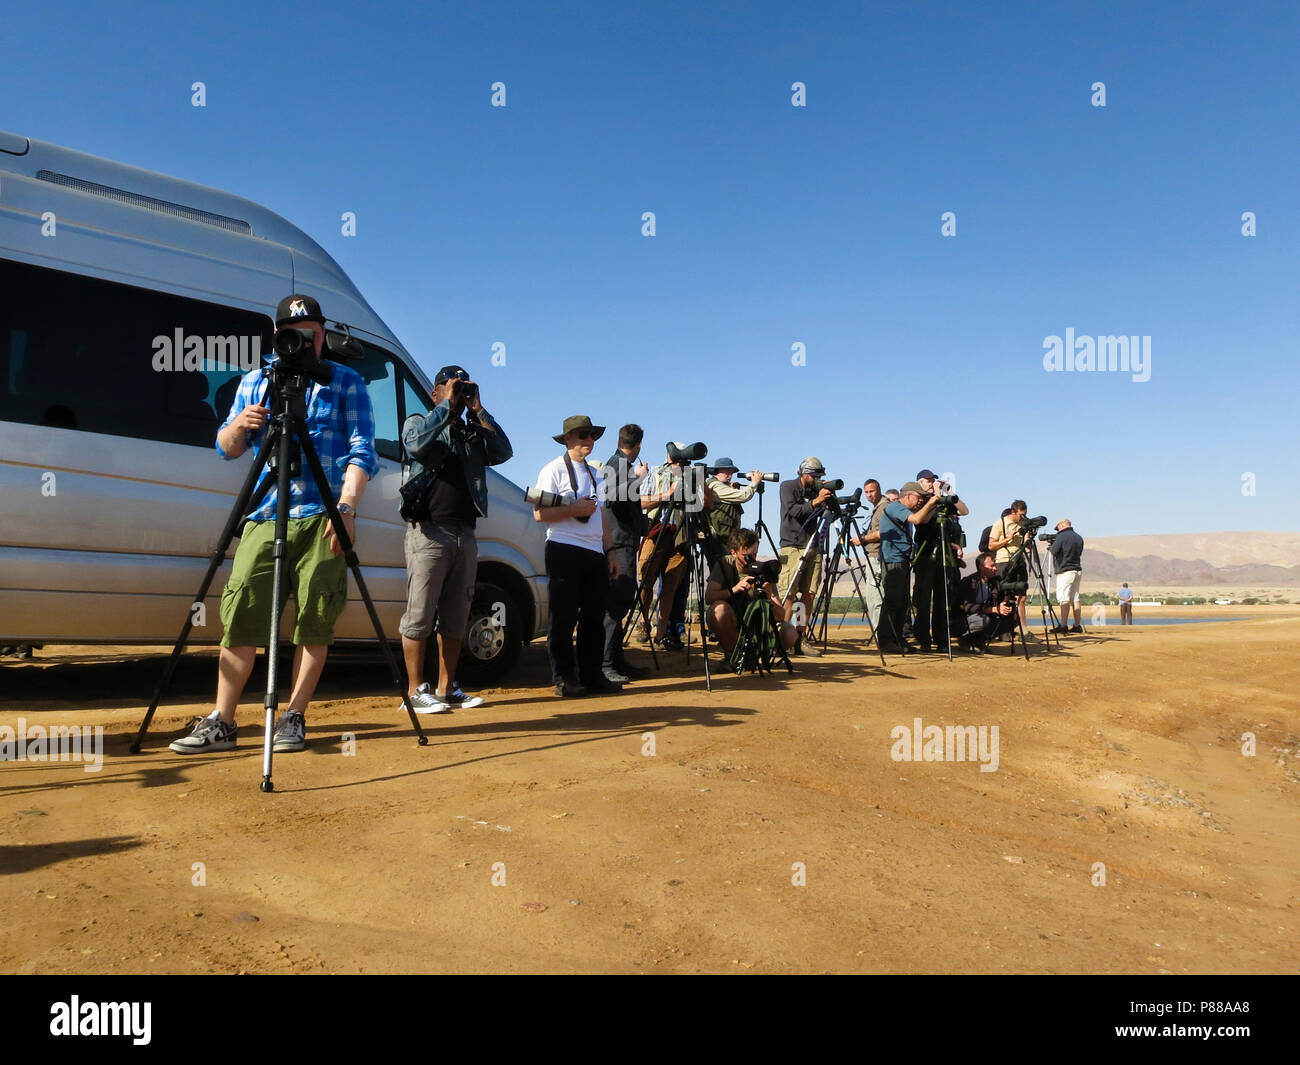 Groep vogelaars met verrekijkers en stethoscopen in woestijn; Gruppe von vogelbeobachter mit Fernglas und Stethoskope in der Wüste Stockfoto